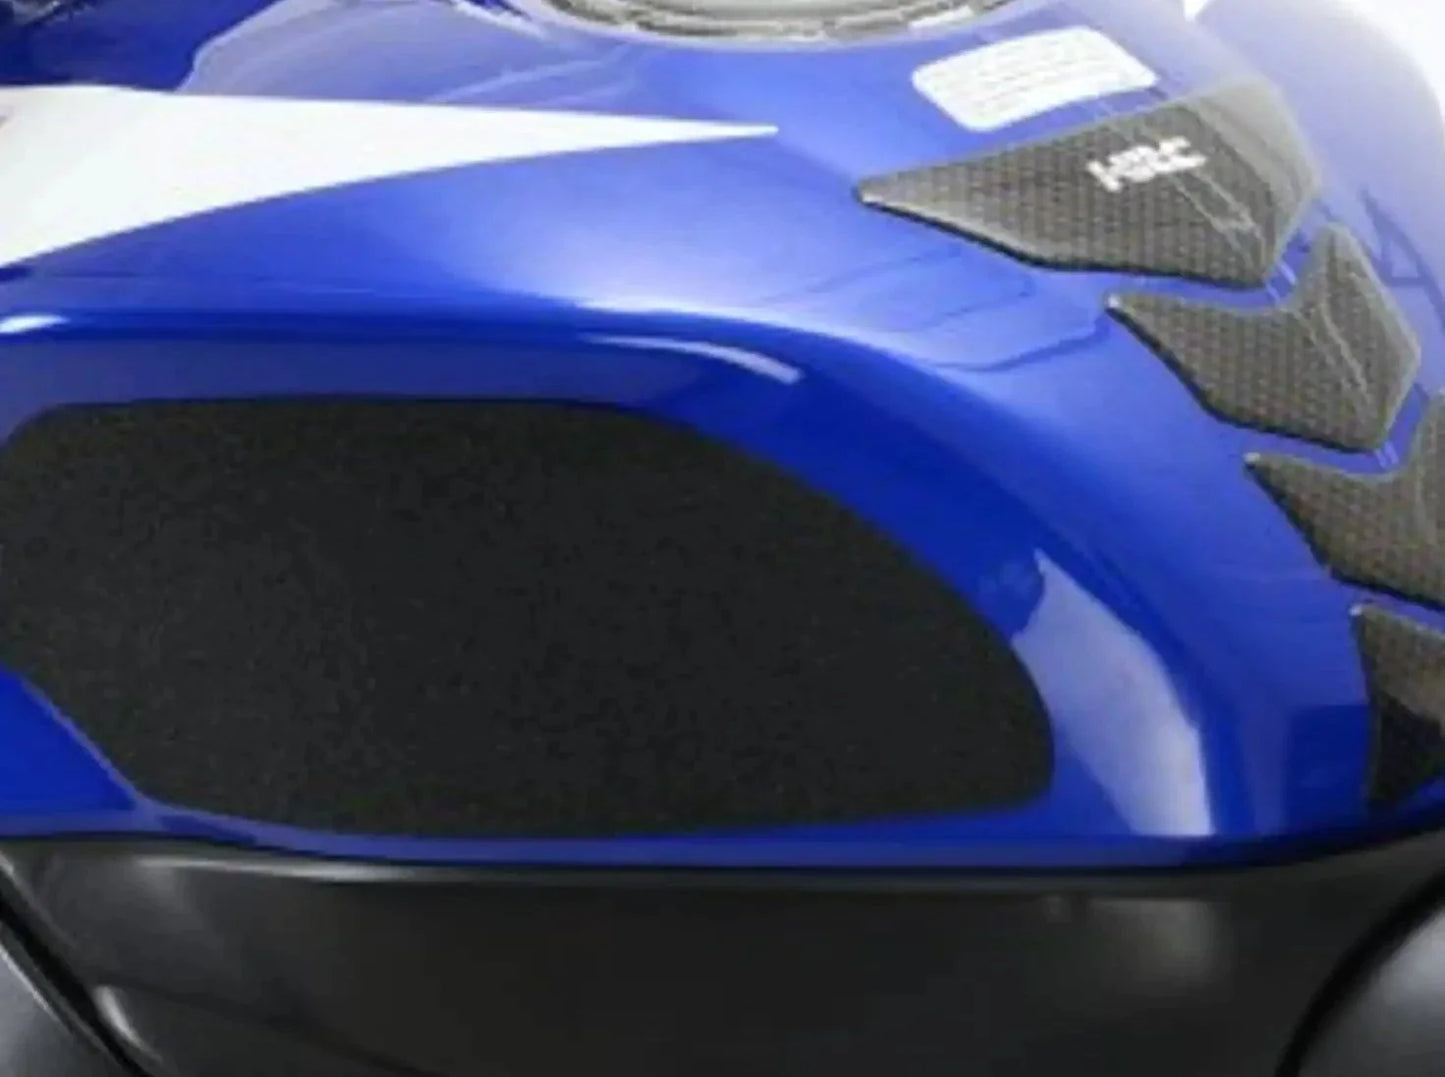 EZRG304 - R&G RACING Honda CBR600RR (07/12) Fuel Tank Traction Grips